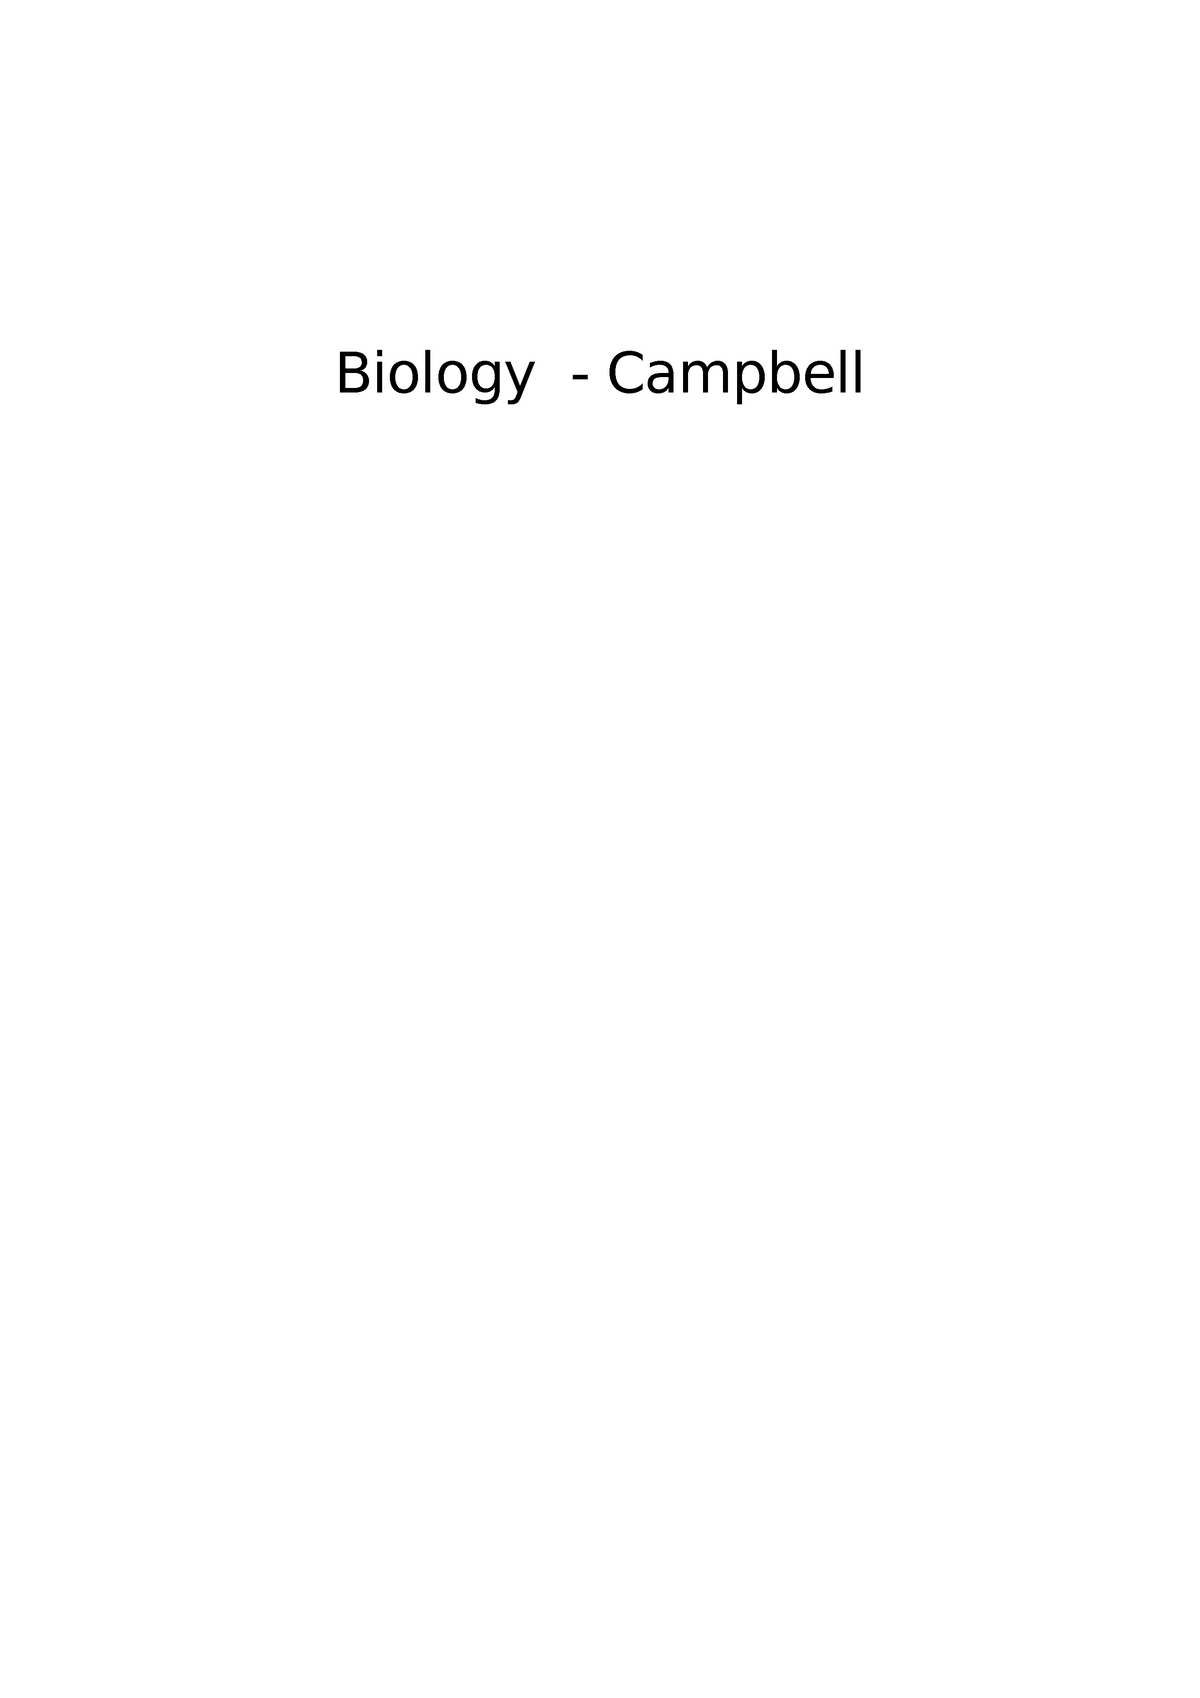 Celbiologie Biology (Campbell) 7.3 7.4 Biology Campbell